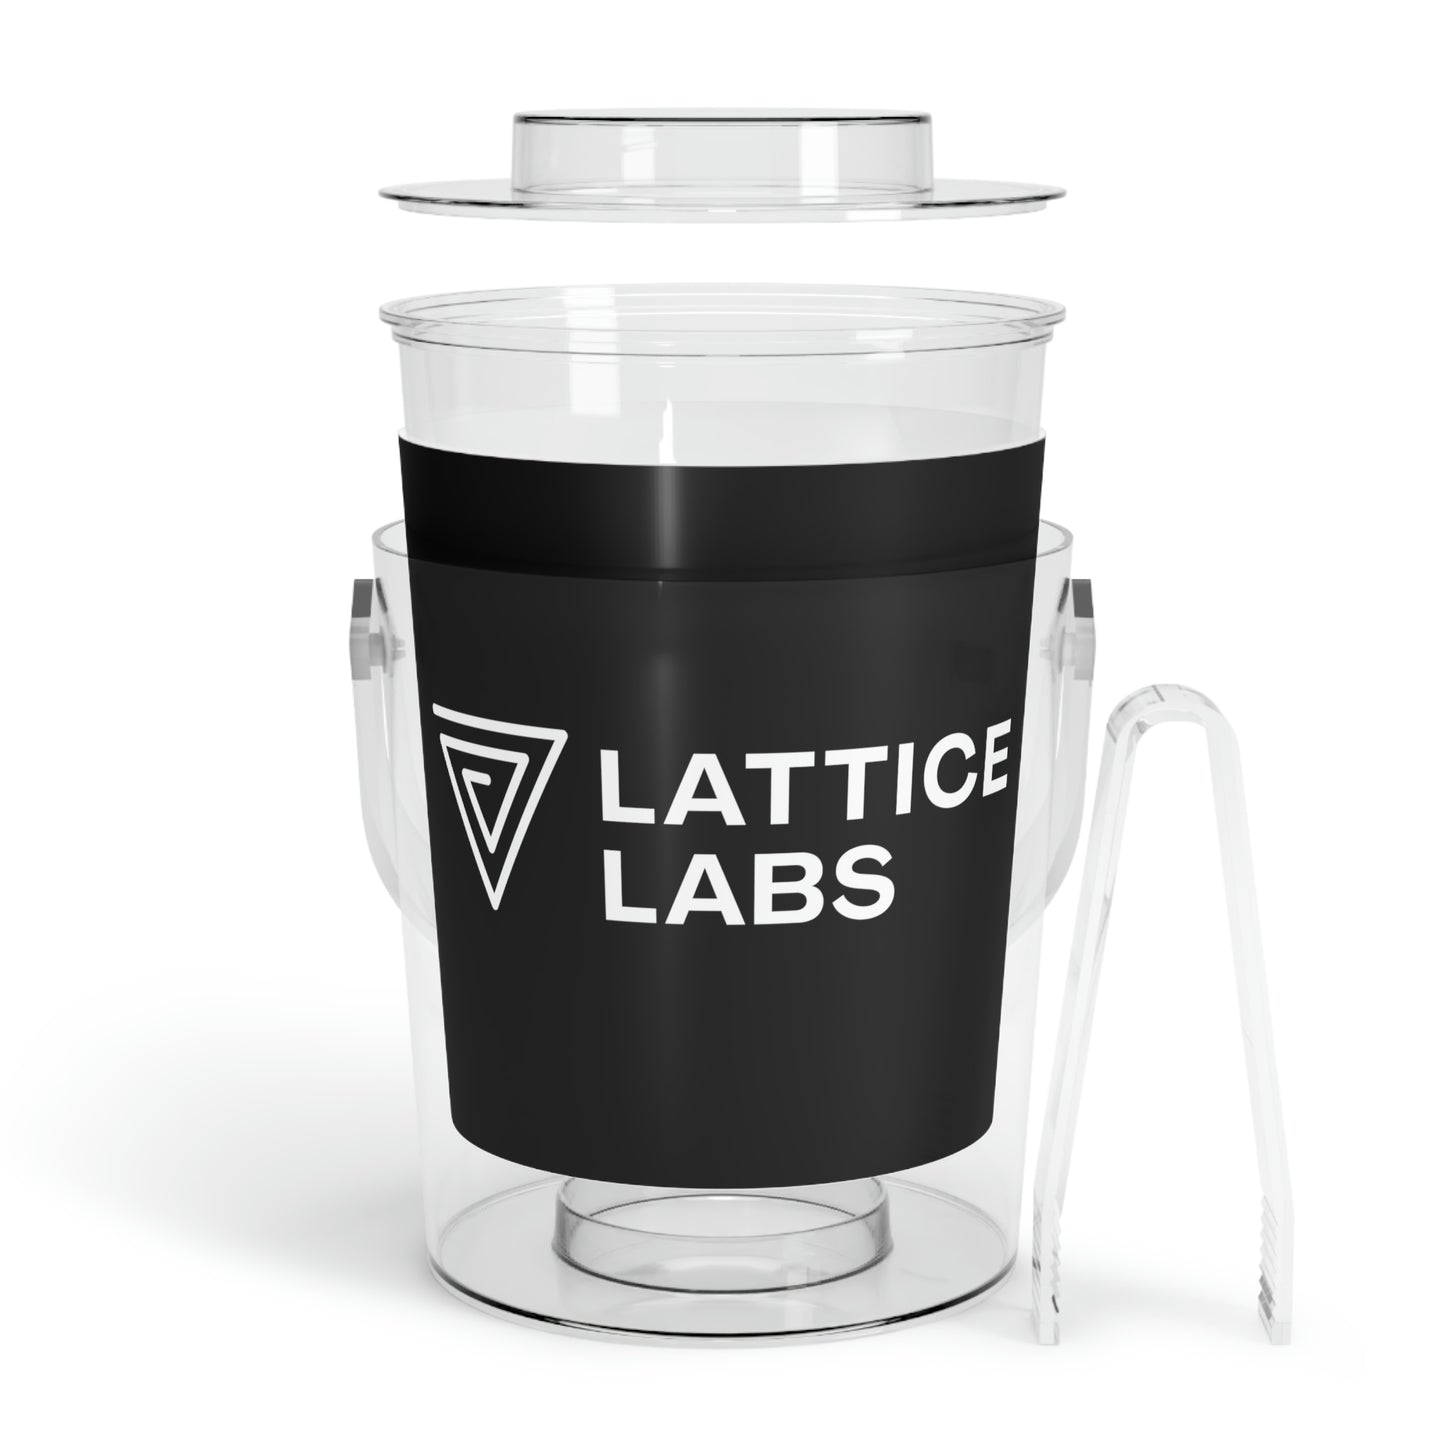 Lattice Labs Ice Bucket with Tongs